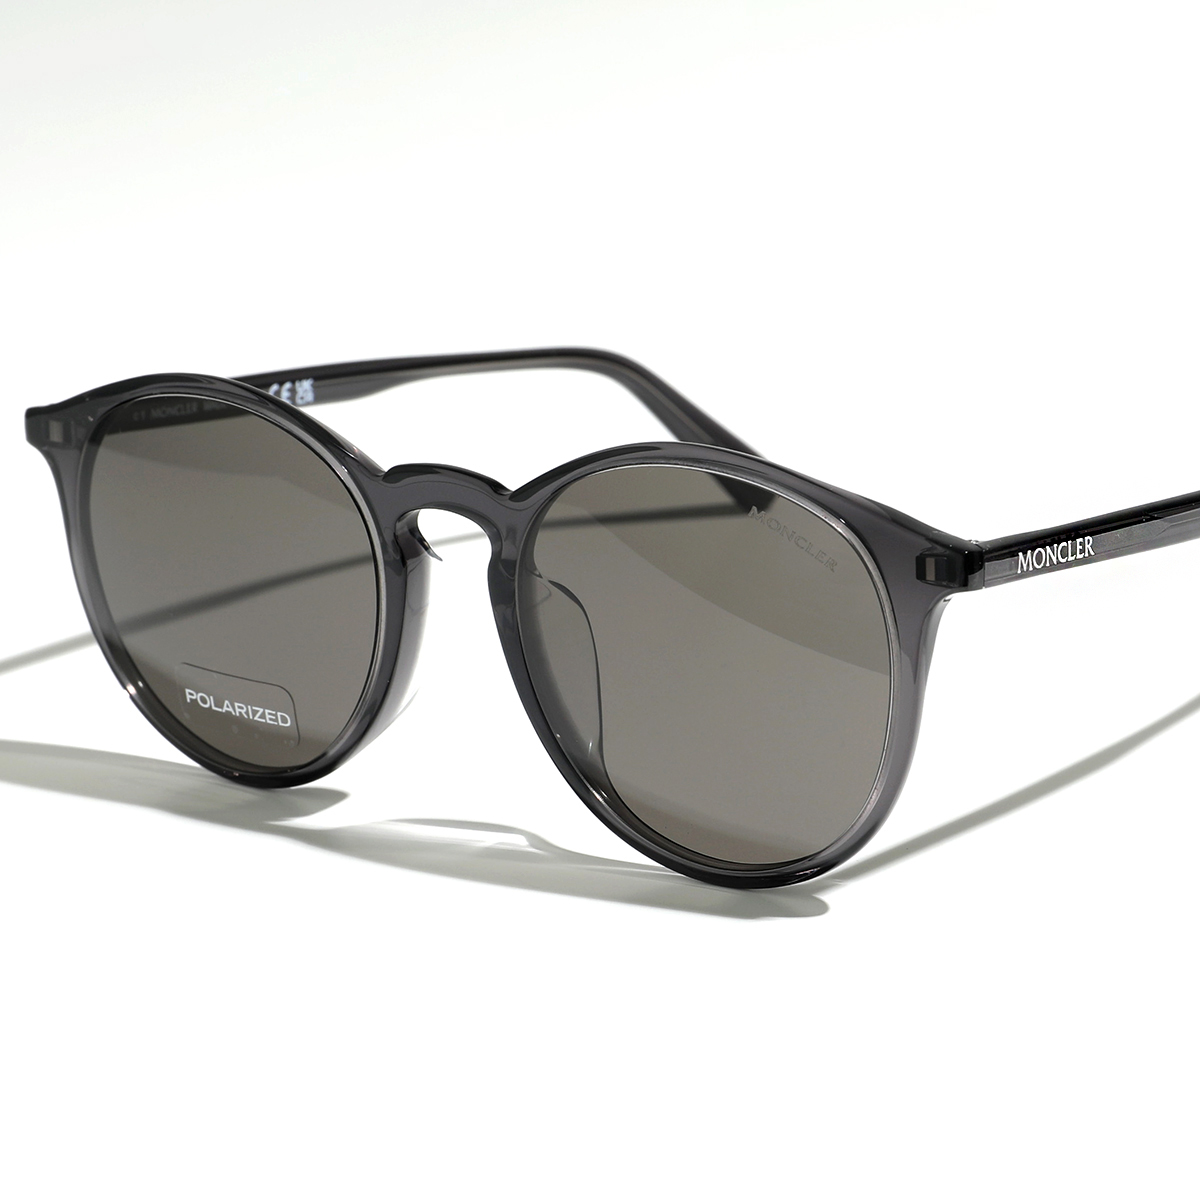 MONCLER モンクレール サングラス ML0213 メンズ ラウンド型 アジアンフィット メガネ 眼鏡 ロゴ アイウェア カラー2色